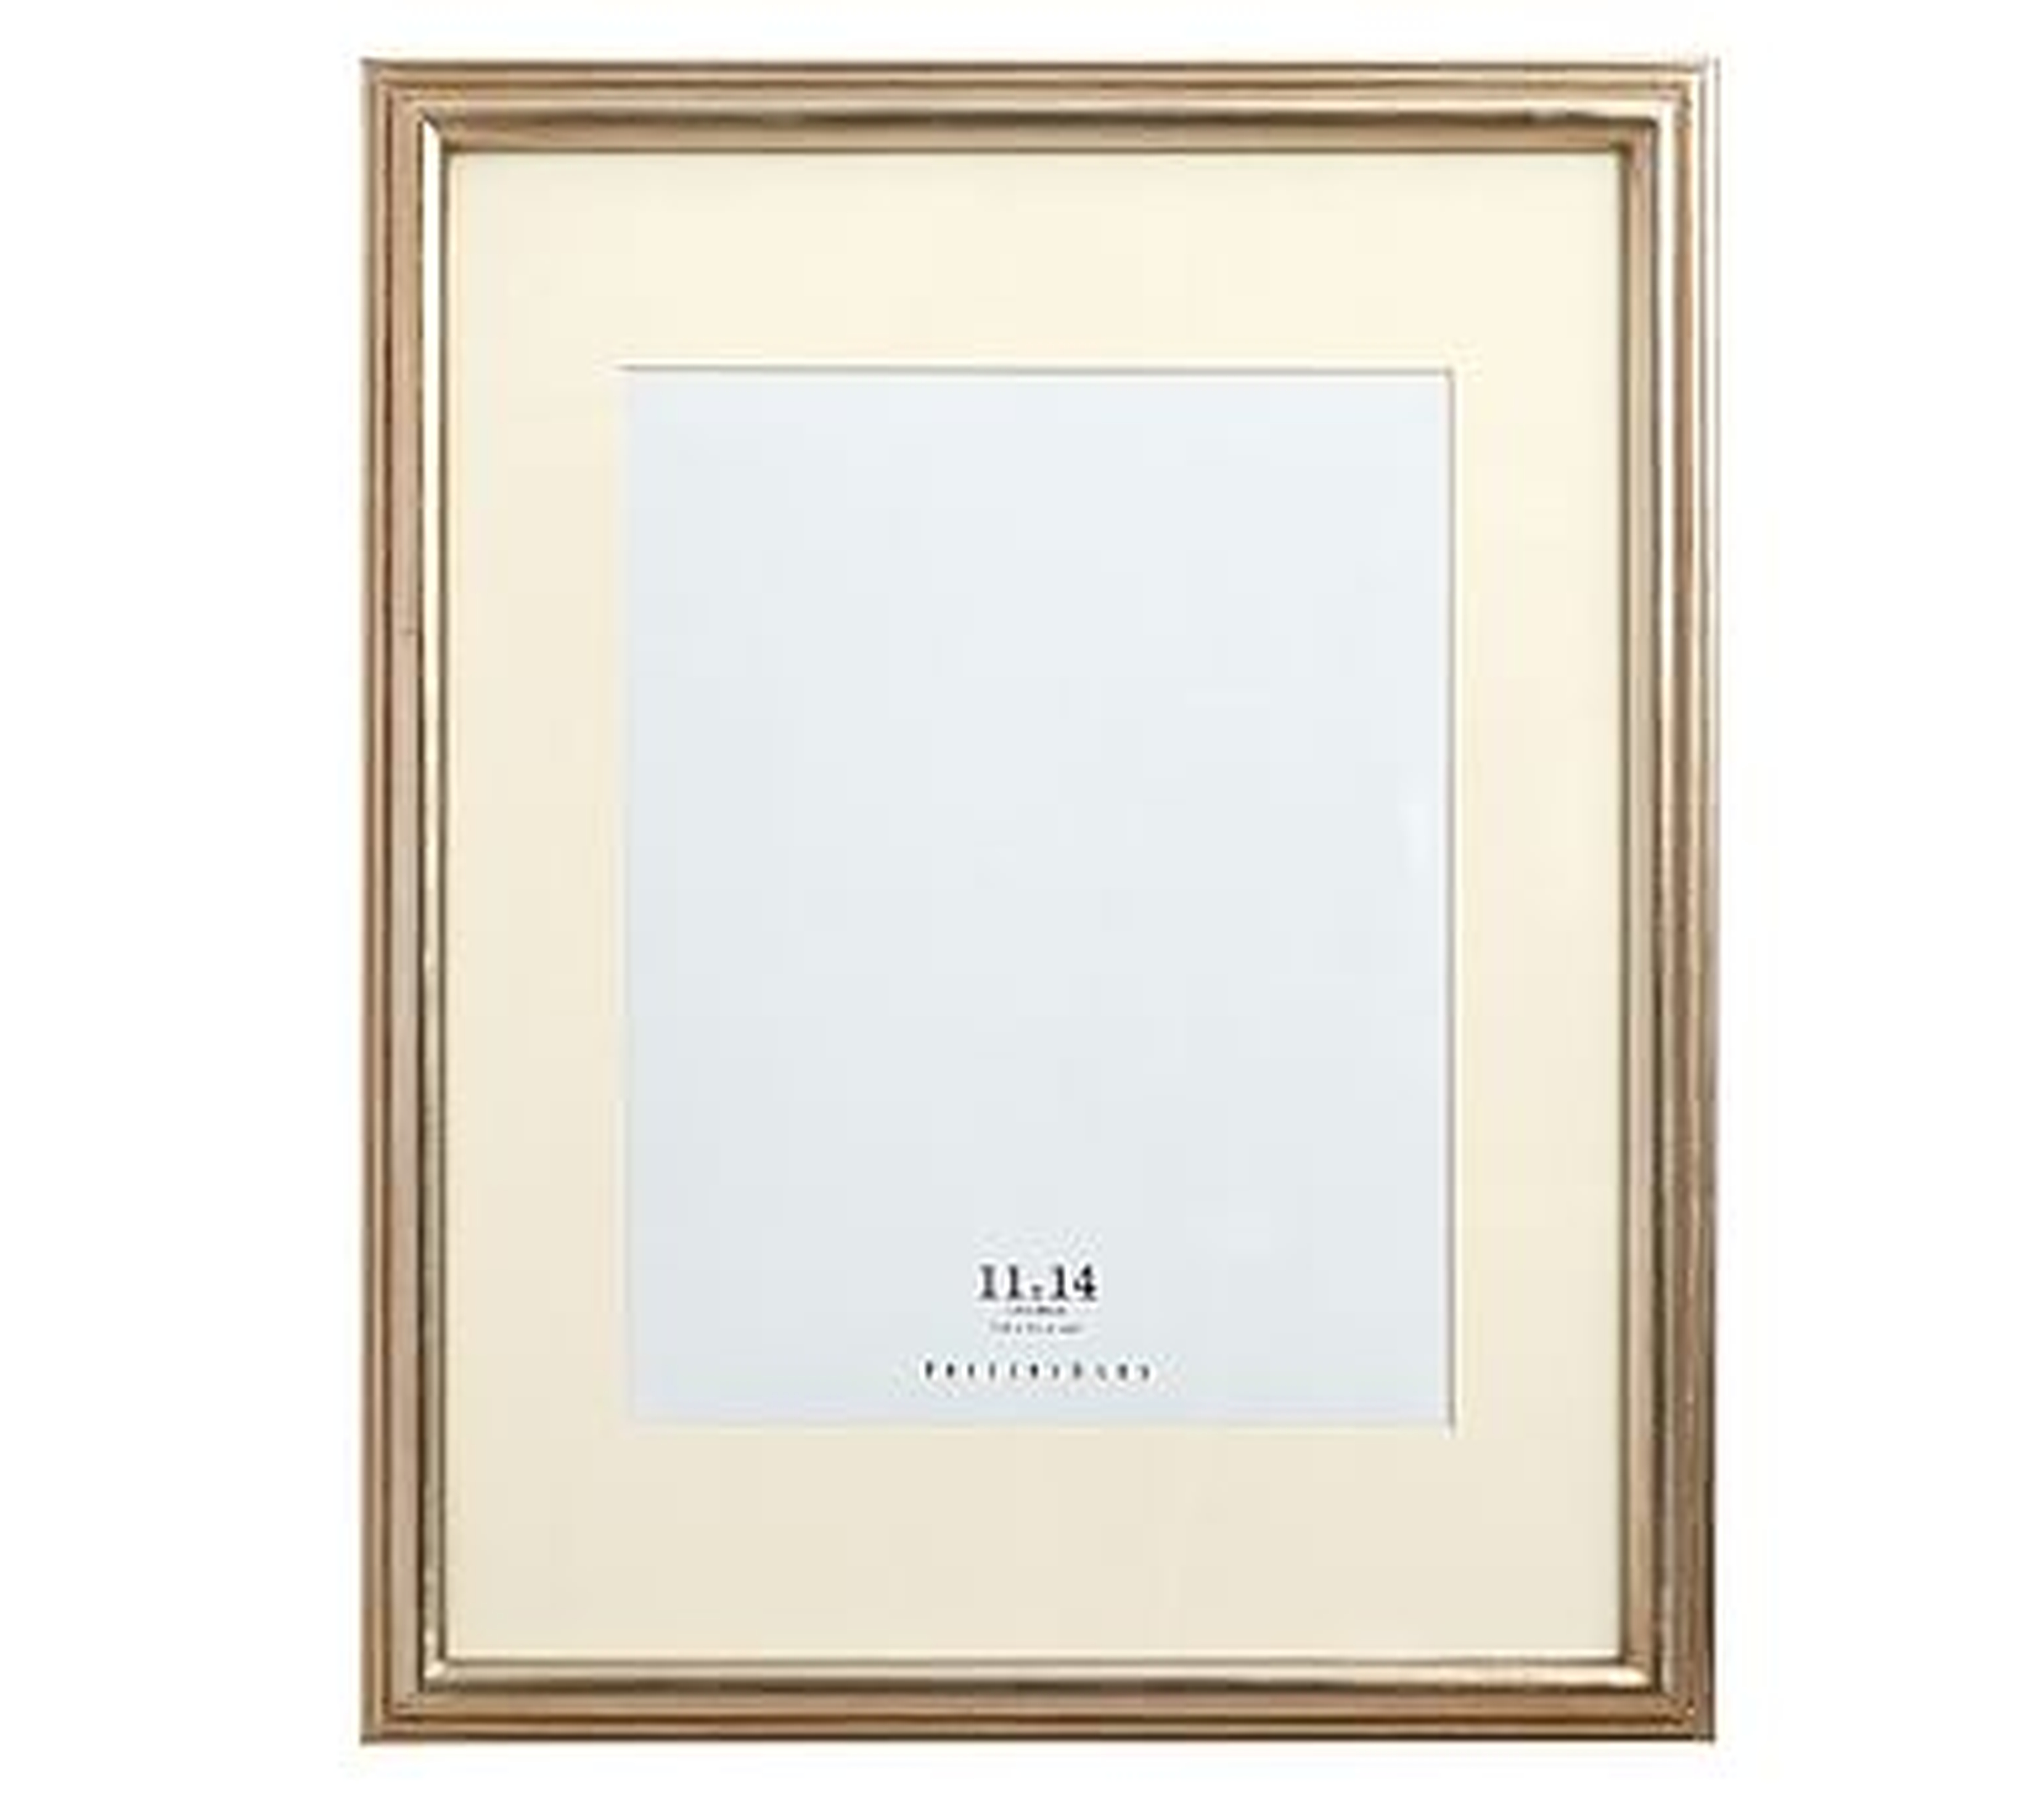 Eliza Gilt Picture Frame, 11 x 14" Medium Frame, Champagne Gilt finish - Pottery Barn